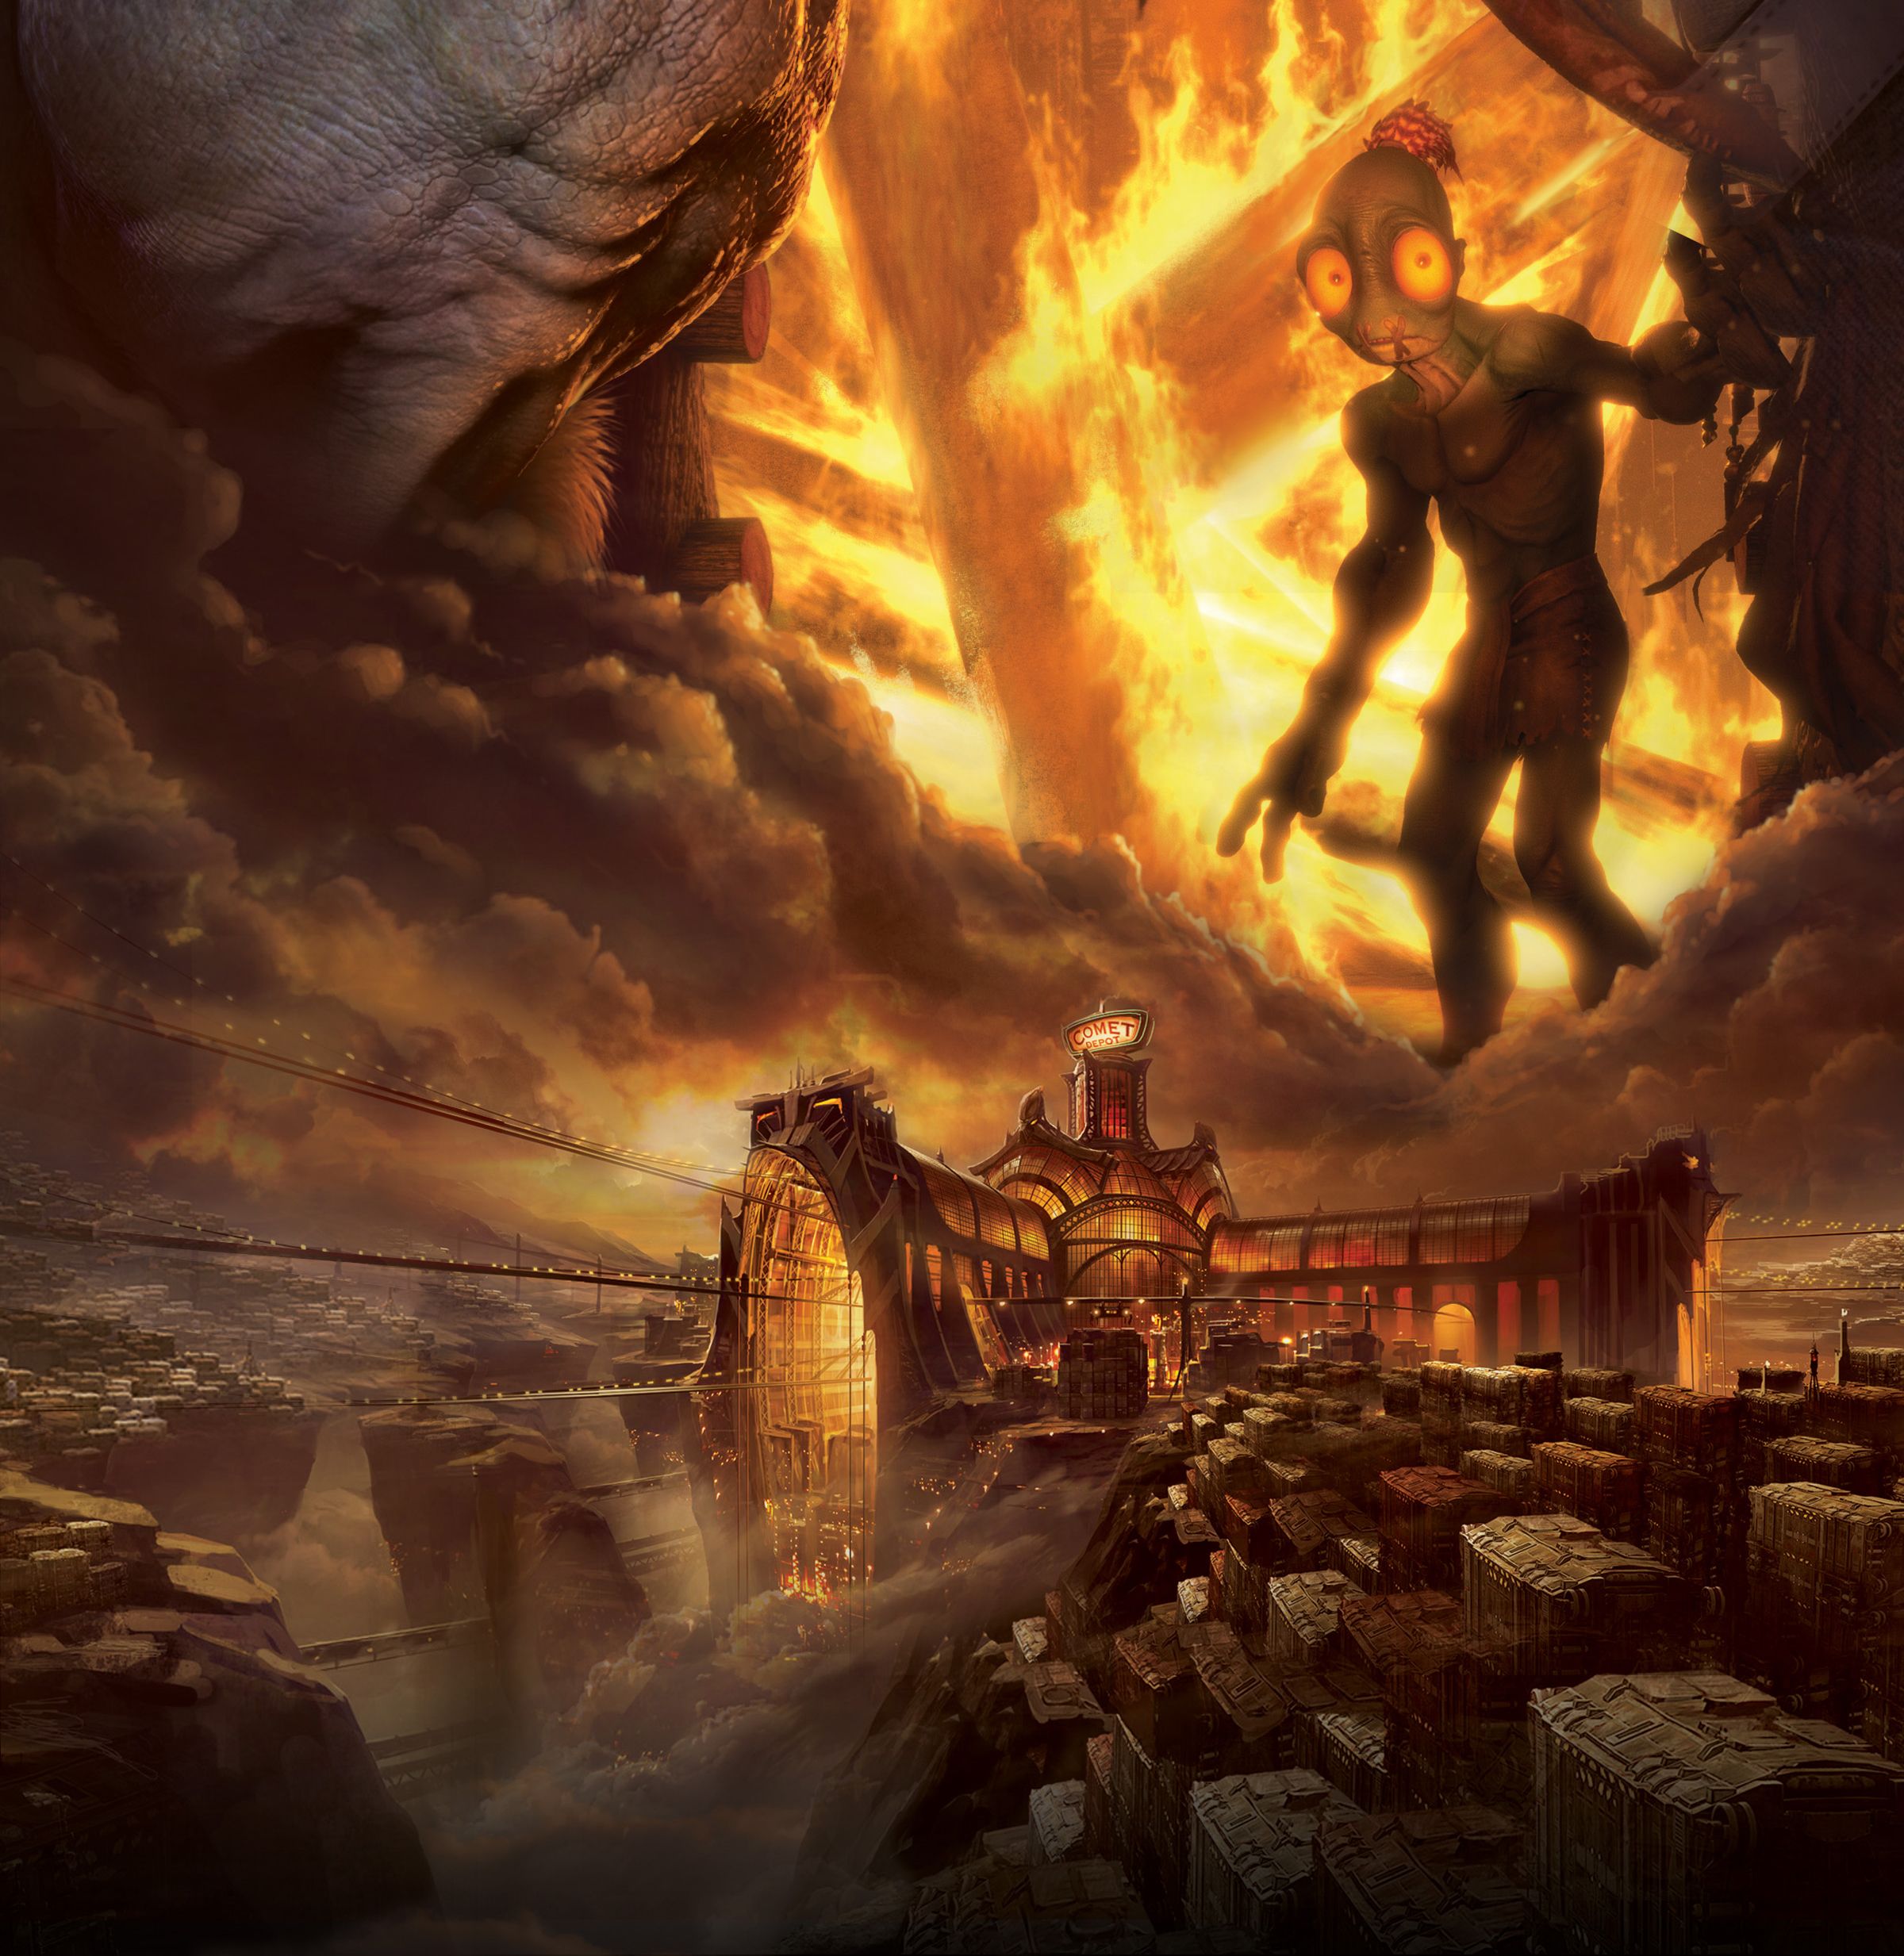 Oddworld Soulstorm Wallpaper, HD Games 4K Wallpaper, Image, Photo and Background